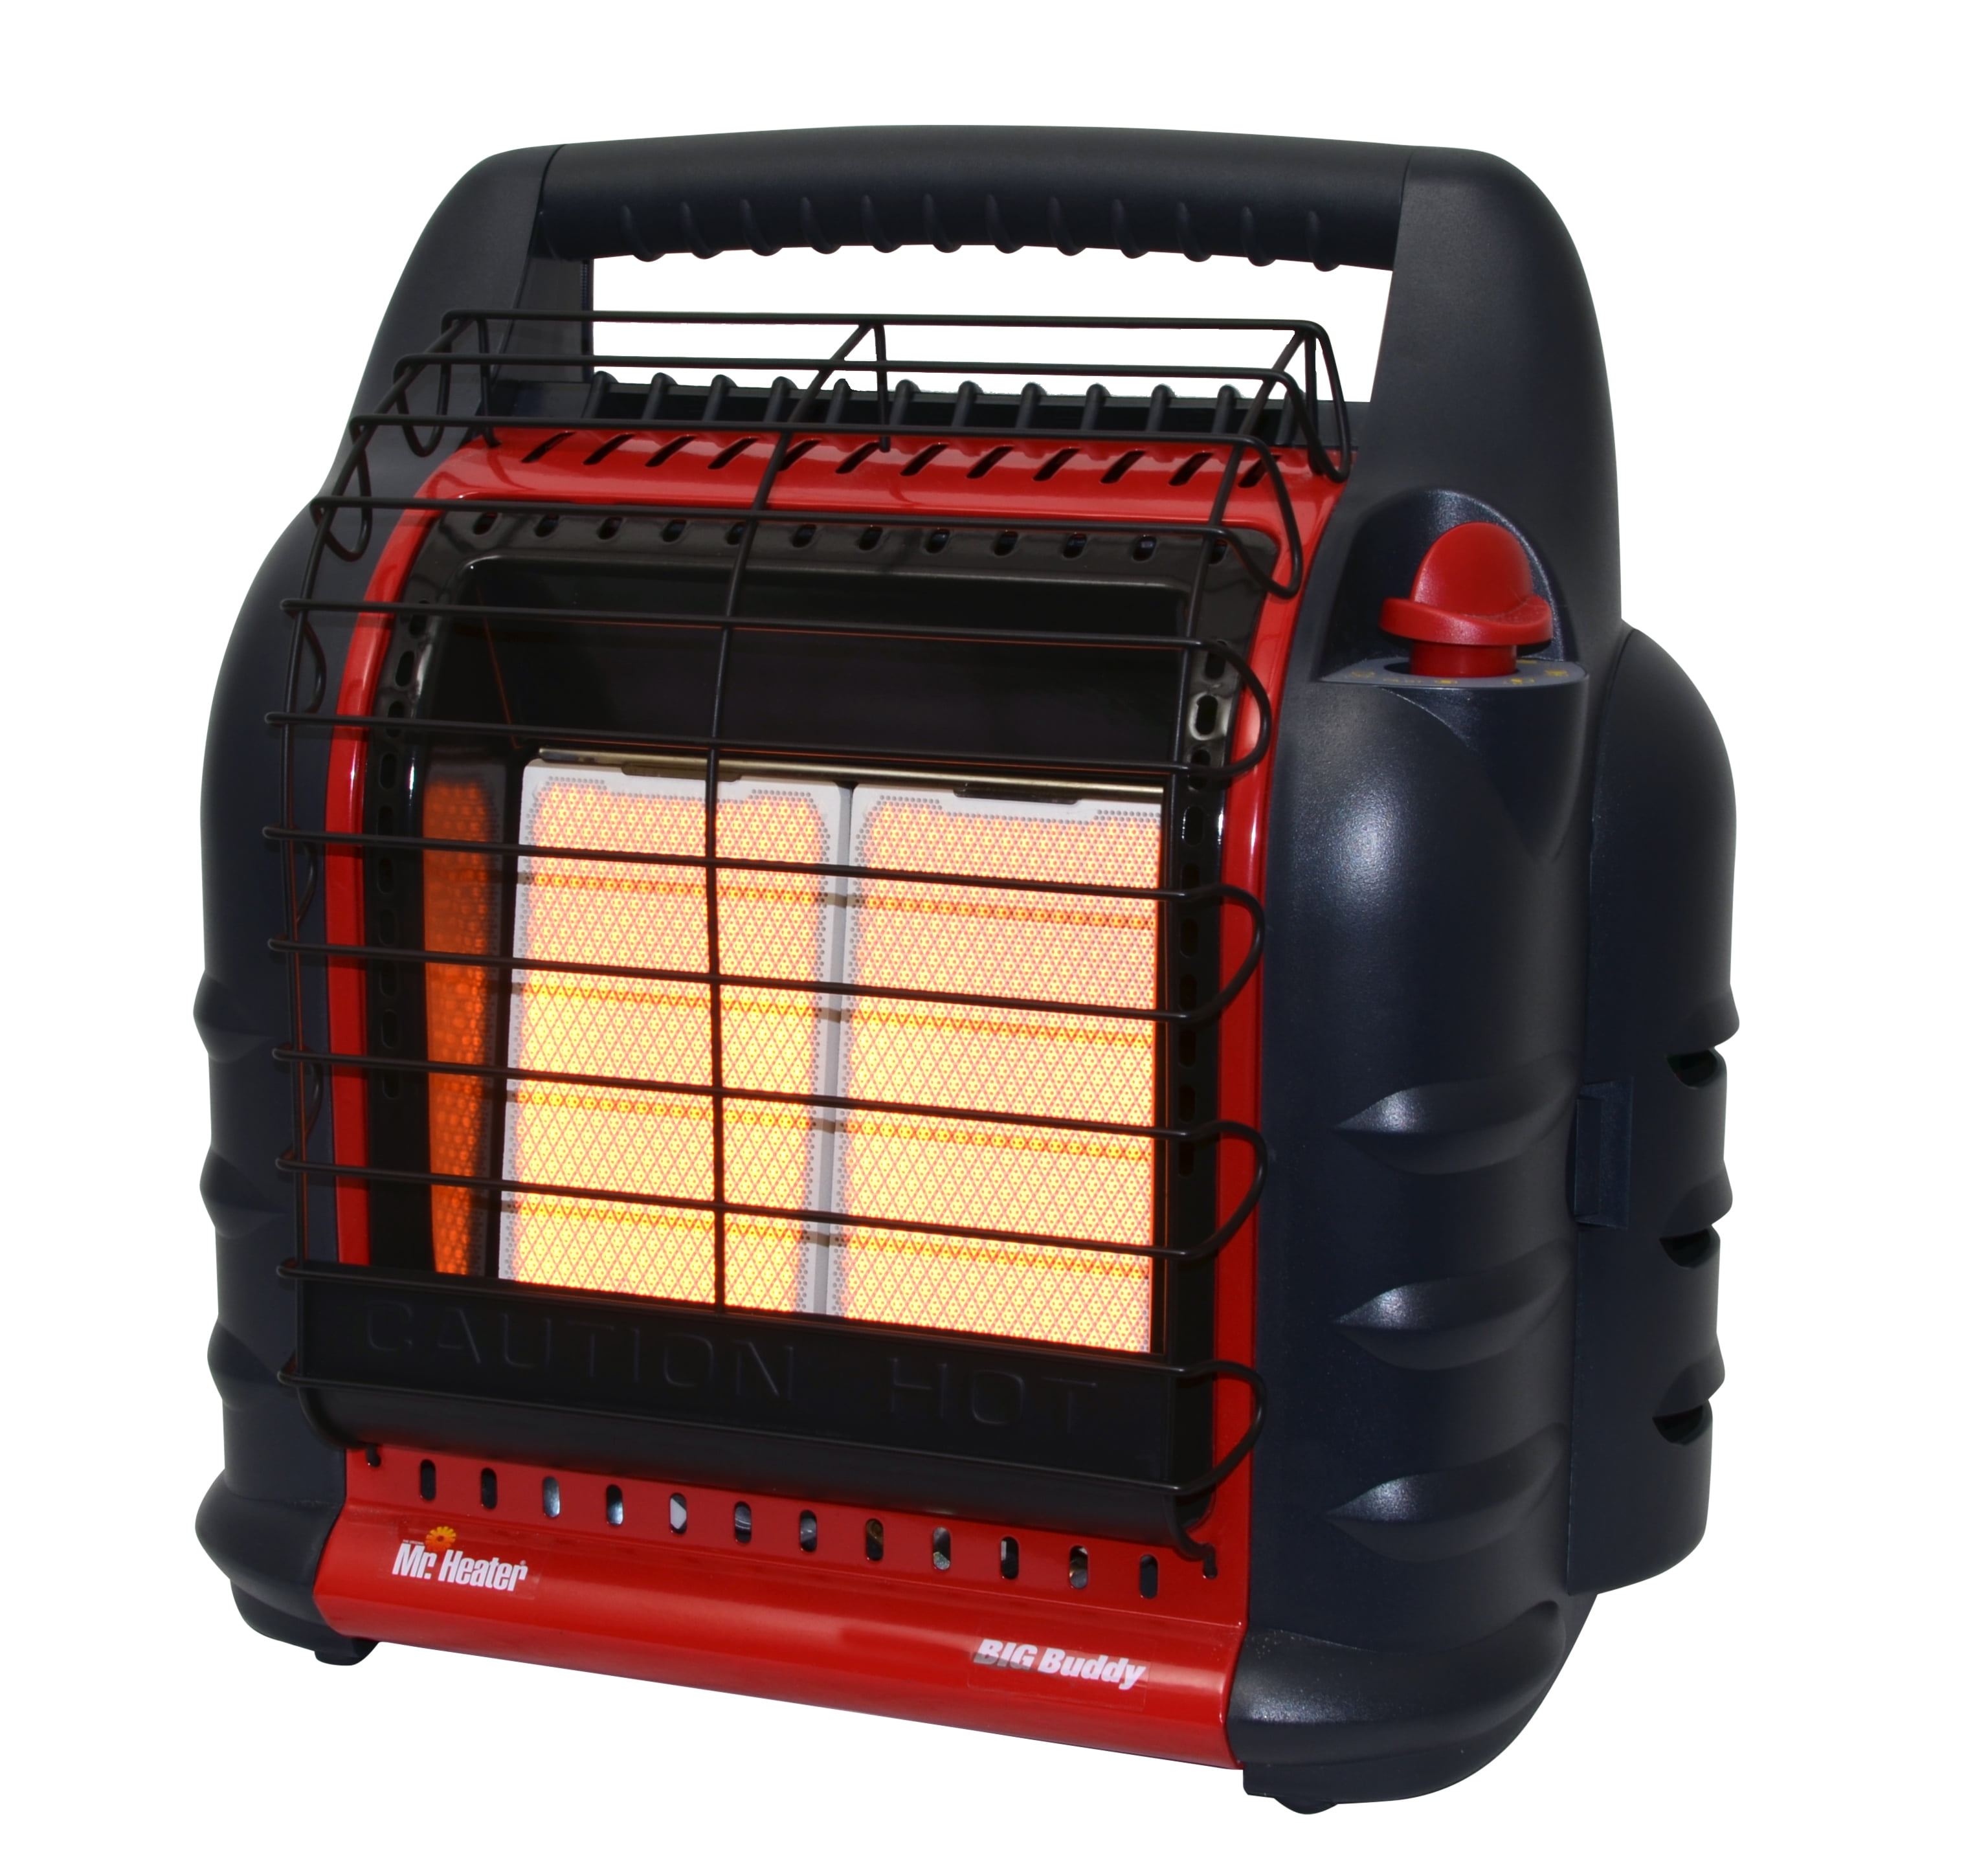 Mr Heater Buddy BIG BUDDY Propane Heater WARM Z IT UP COOKING WARMING TRAY PAN